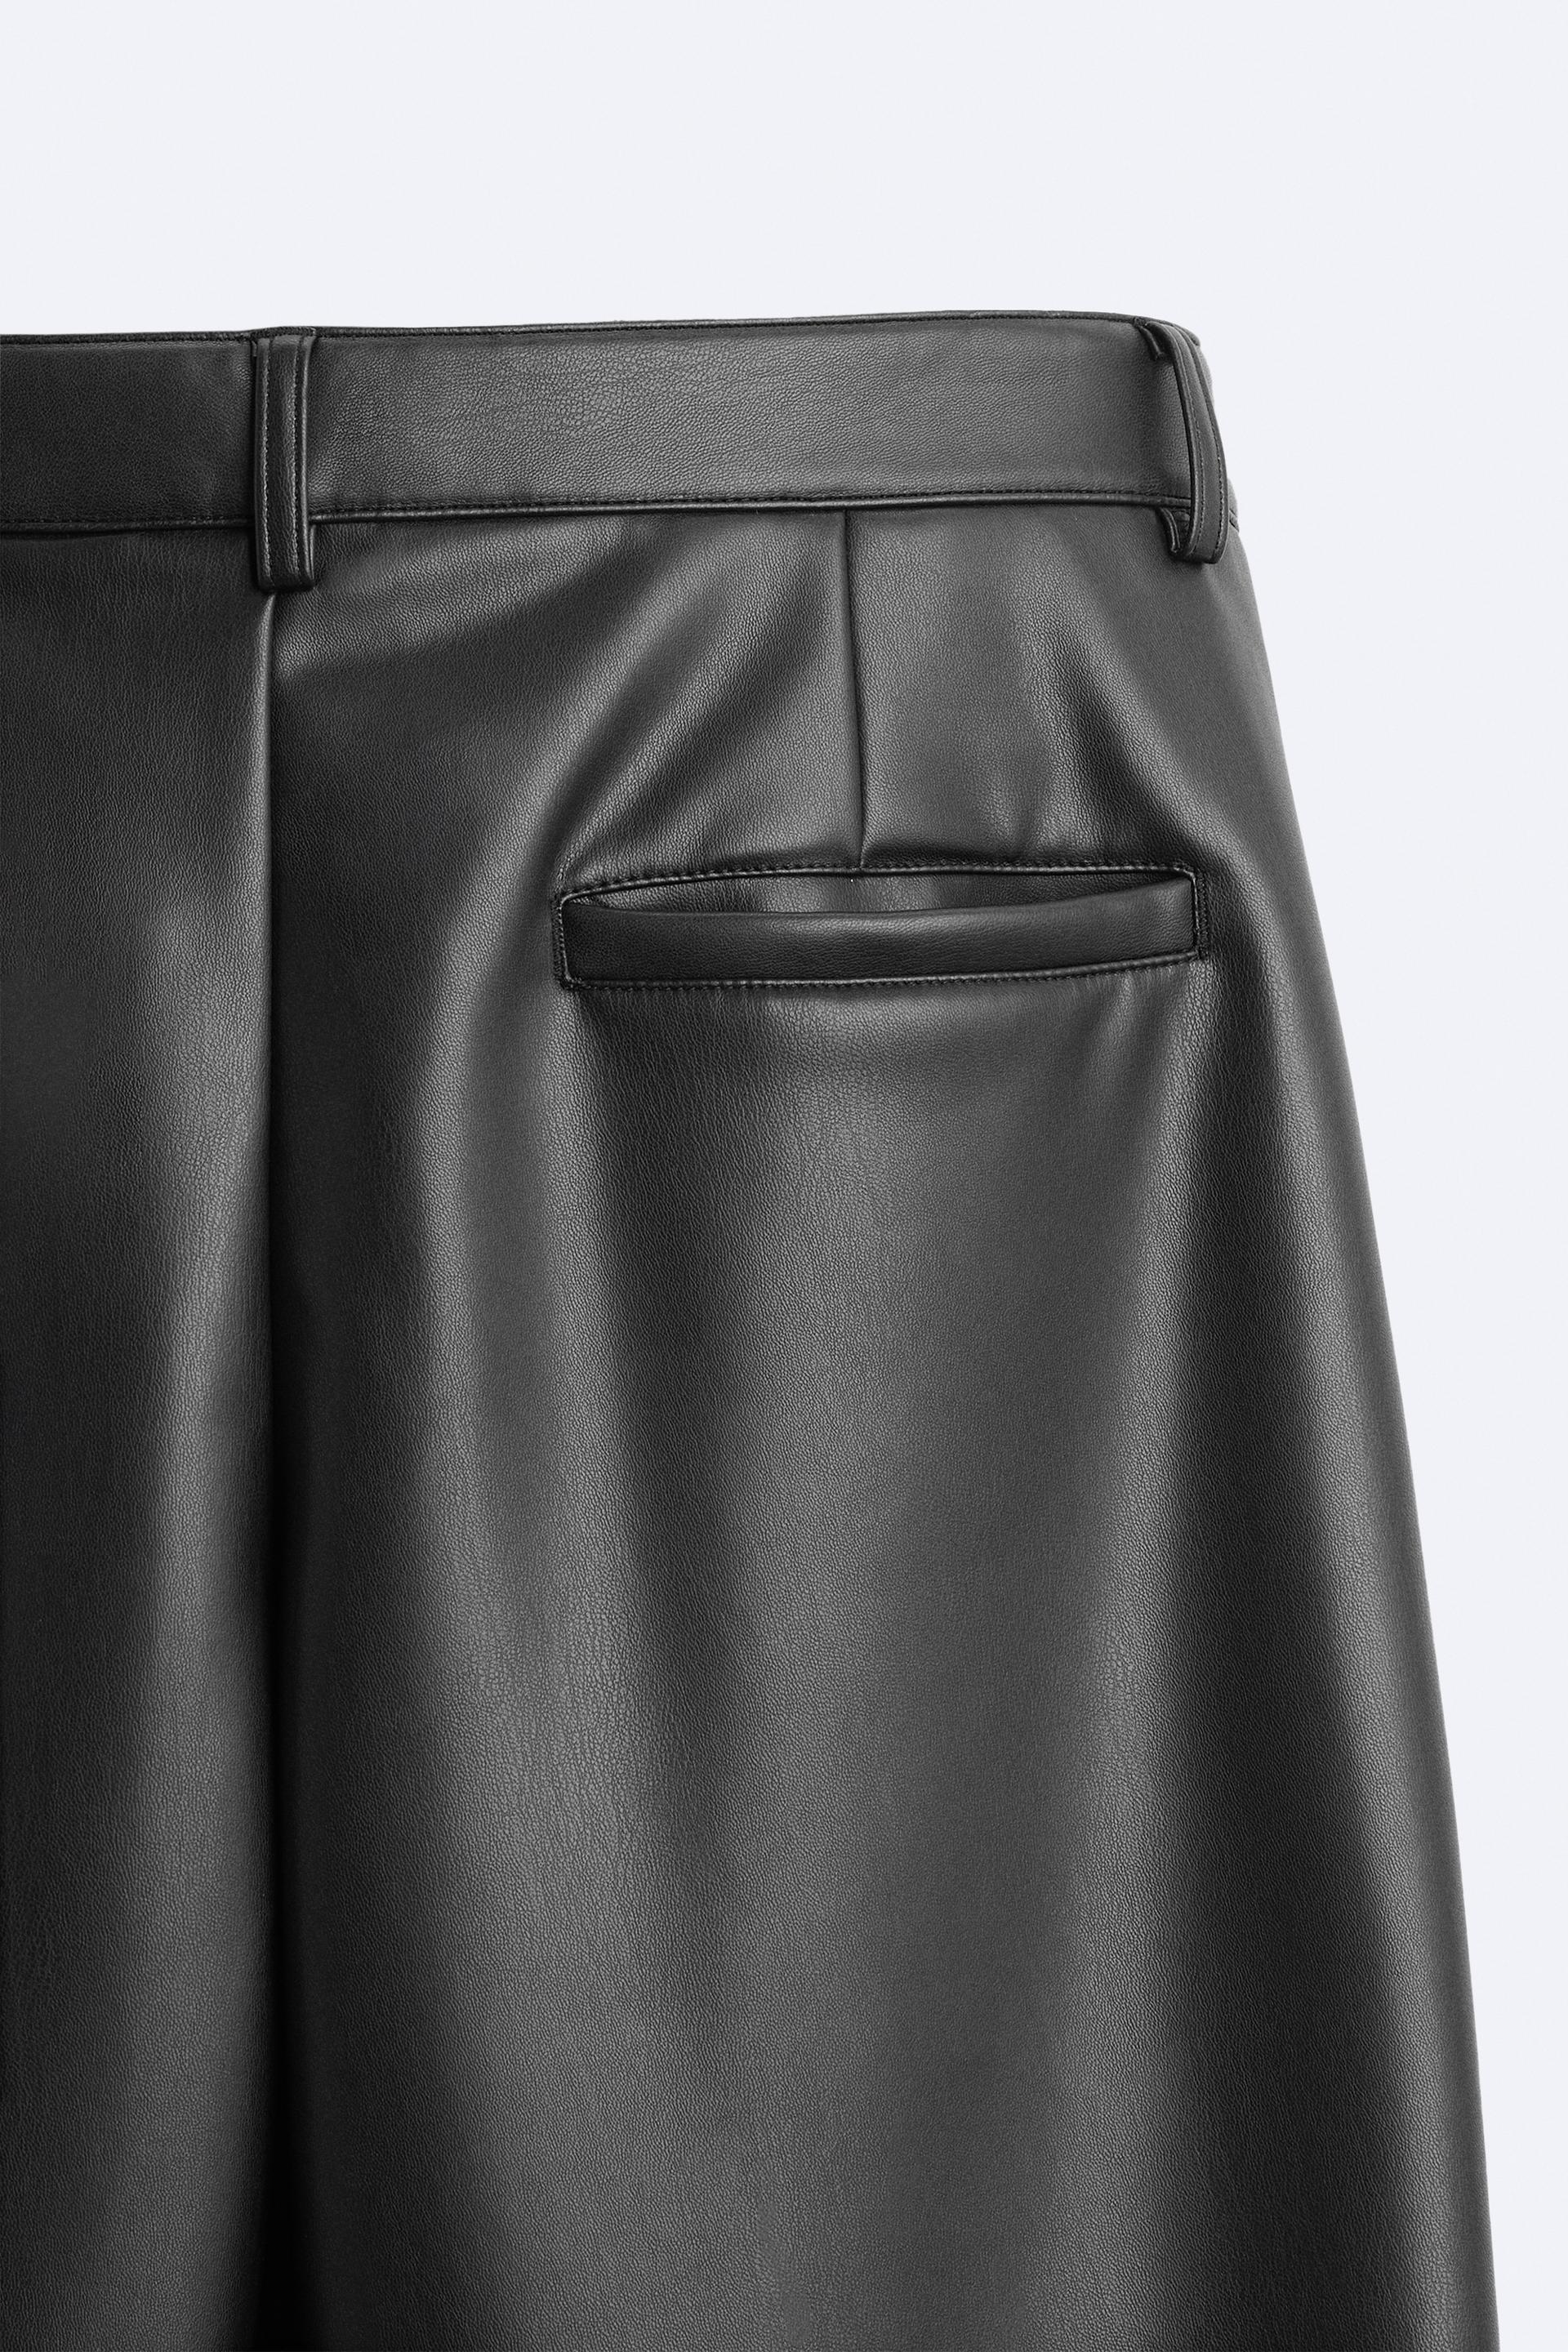 Zara, Pants & Jumpsuits, Zara Formal Pants With Faux Leather Strip Size 4